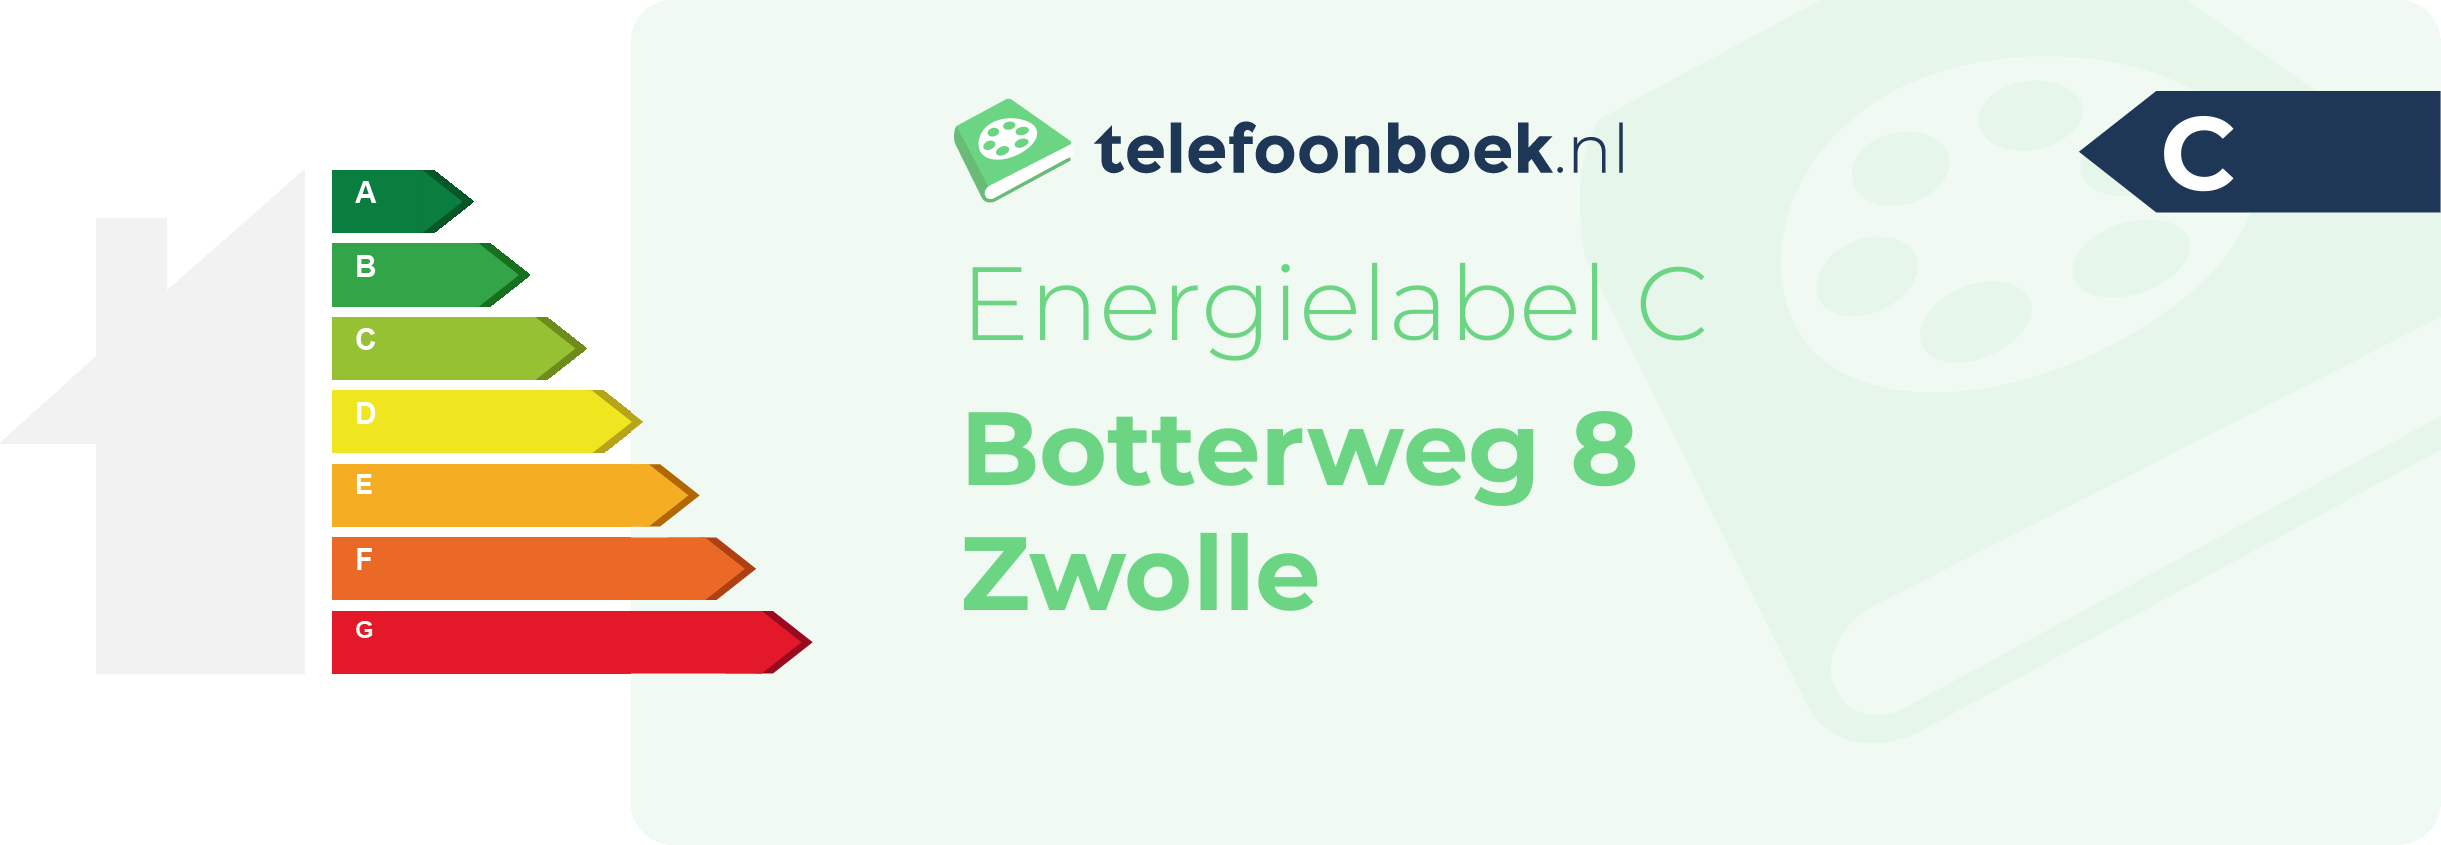 Energielabel Botterweg 8 Zwolle